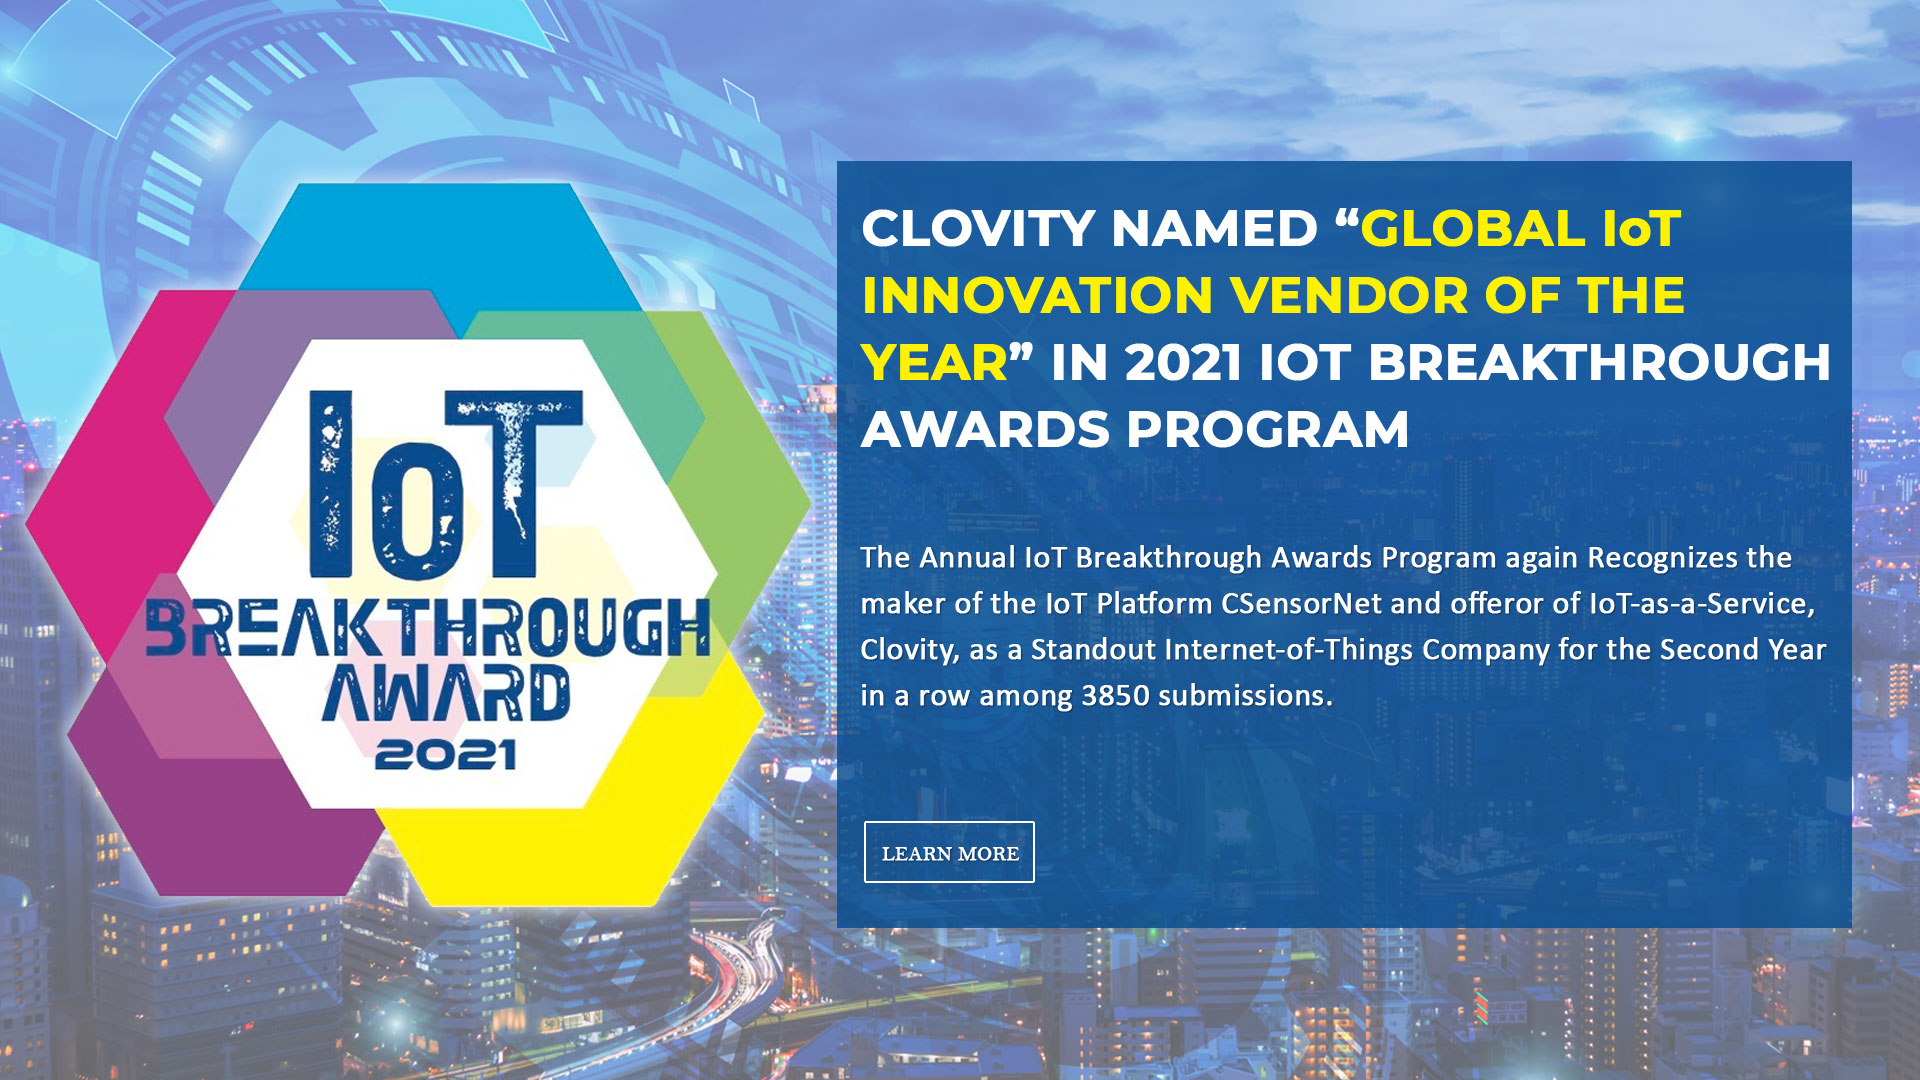 IoT BreakThrough Award 2021